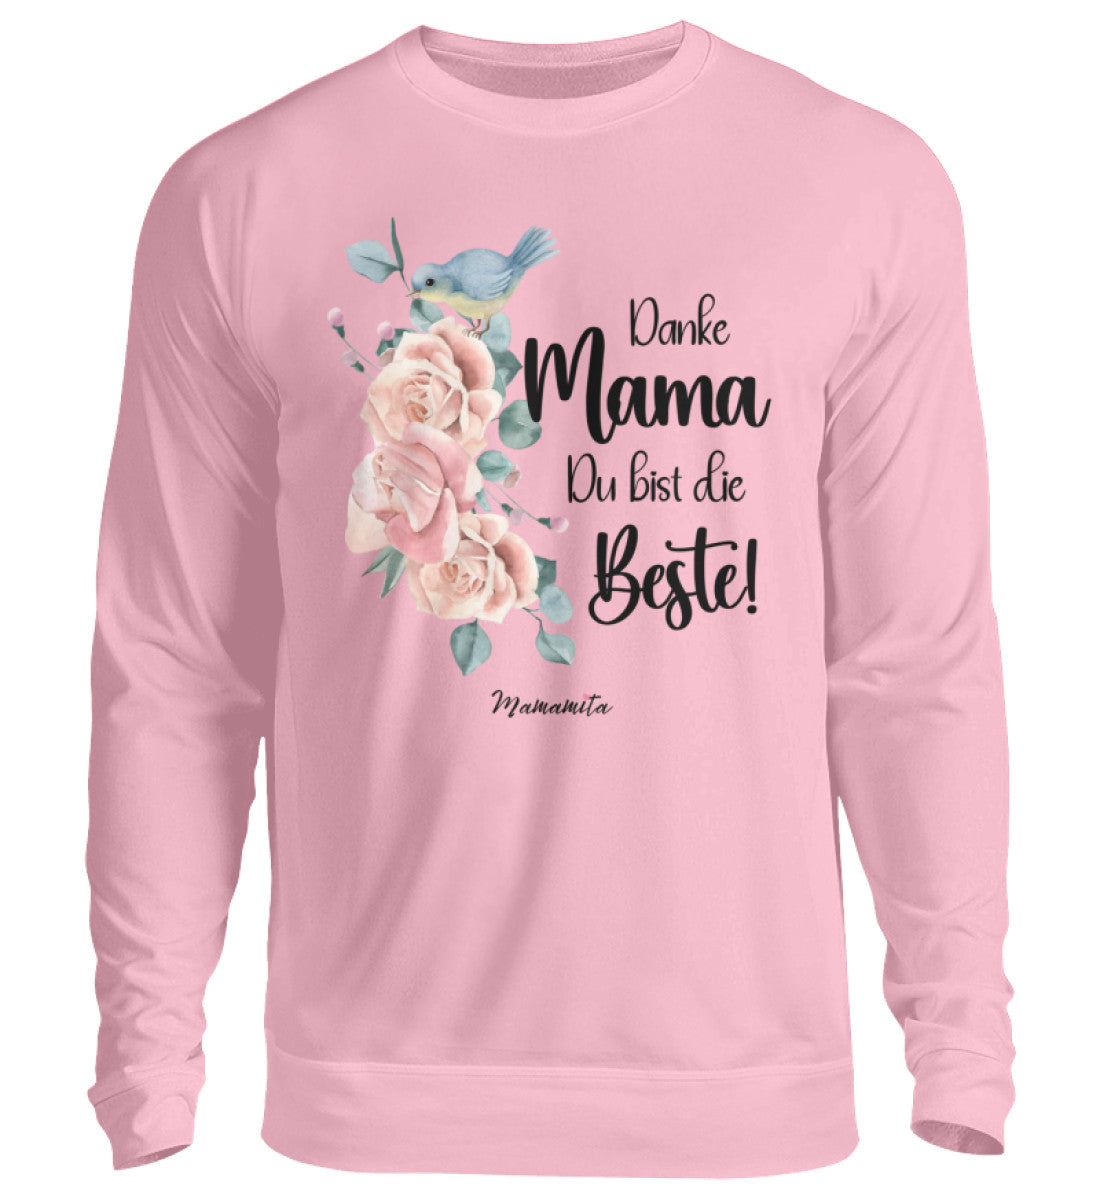 Rosa Shirt für beste Mama danke 